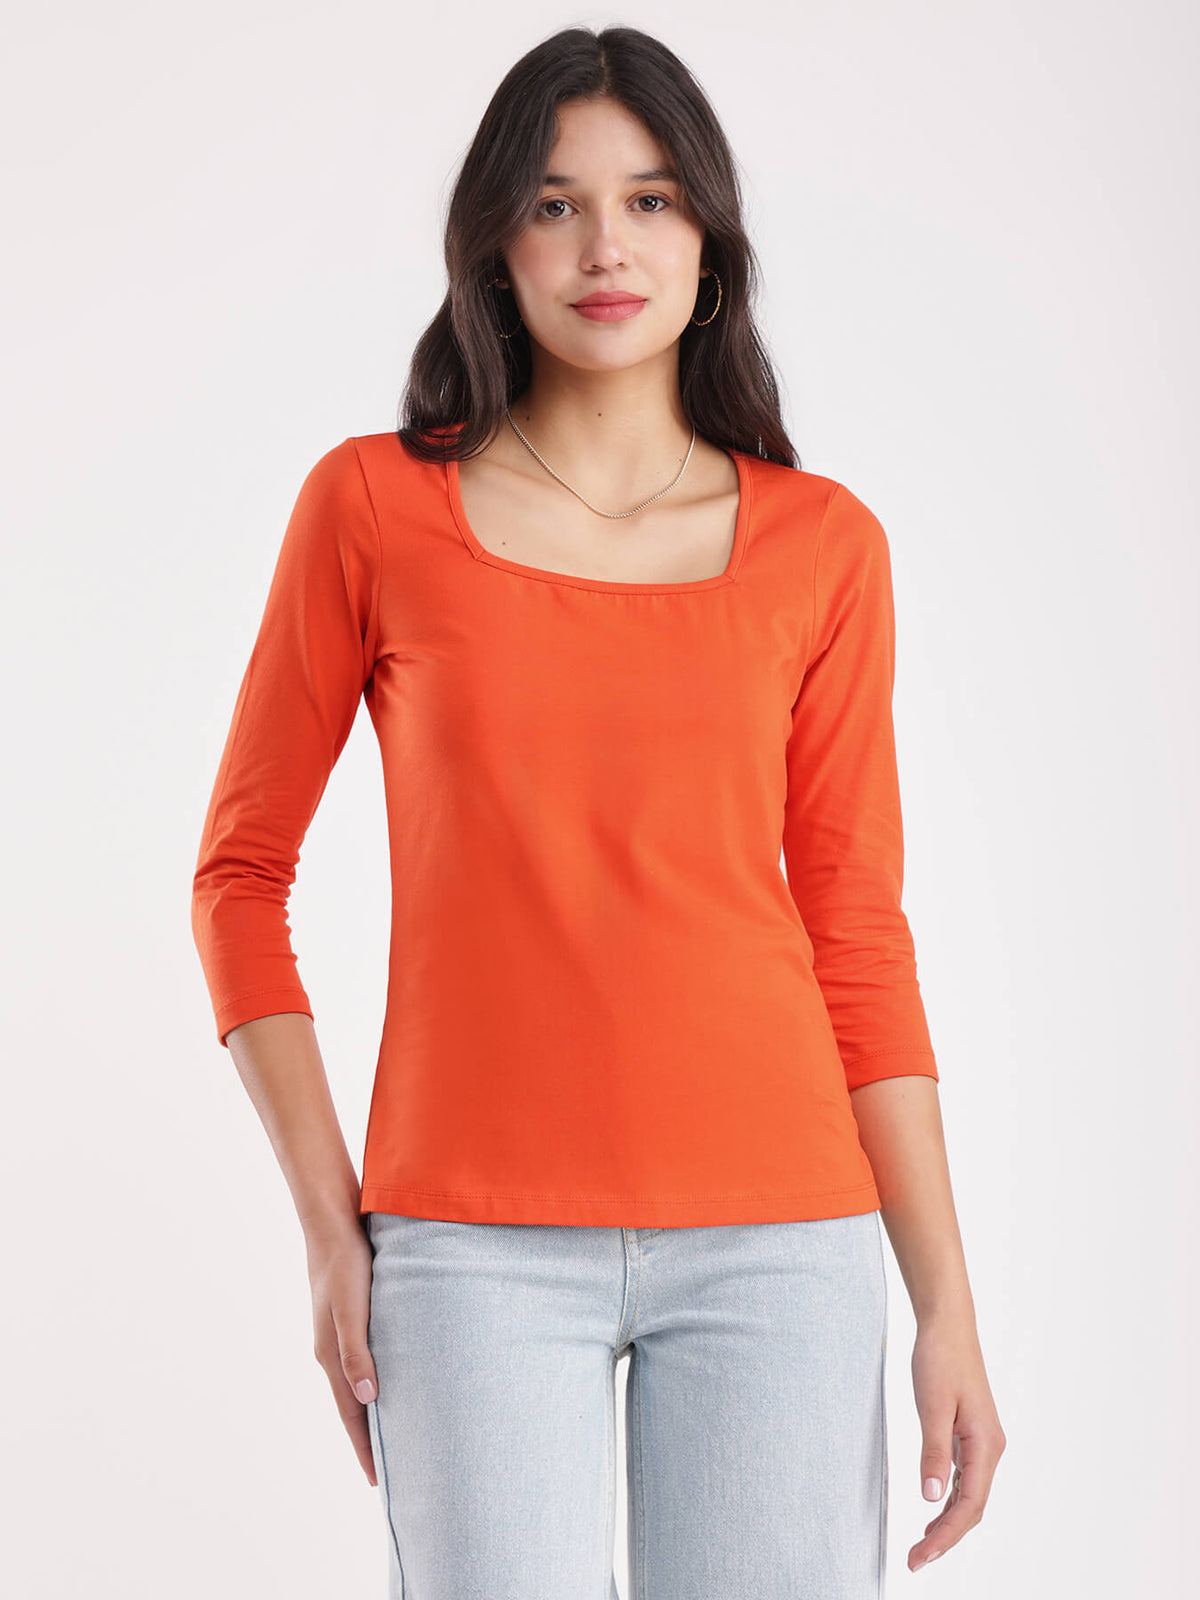 LivSoft Cotton Square Neck T-Shirt - Orange